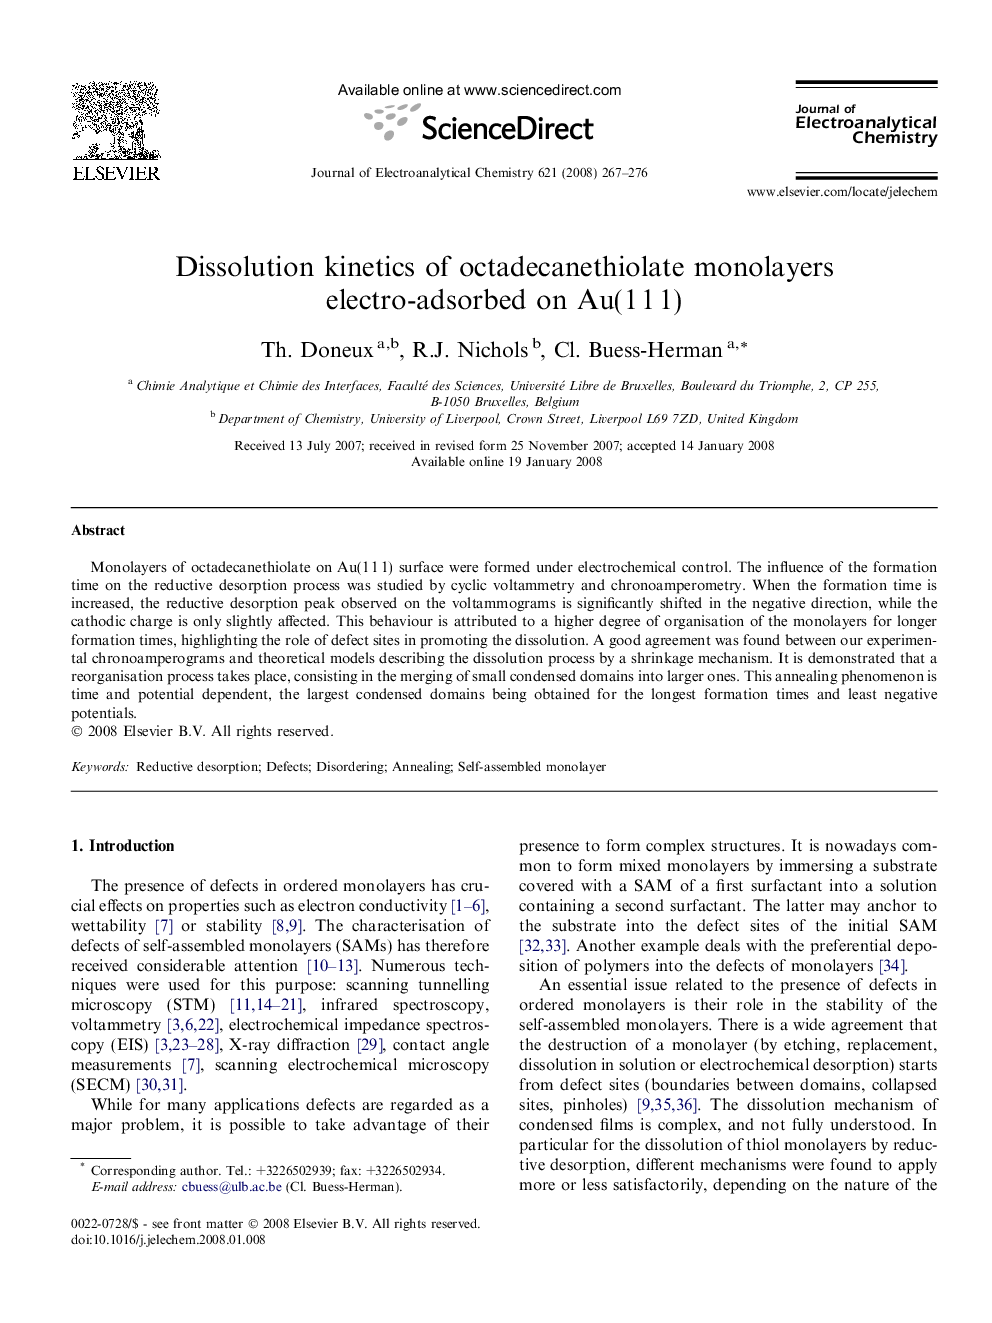 Dissolution kinetics of octadecanethiolate monolayers electro-adsorbed on Au(1 1 1)